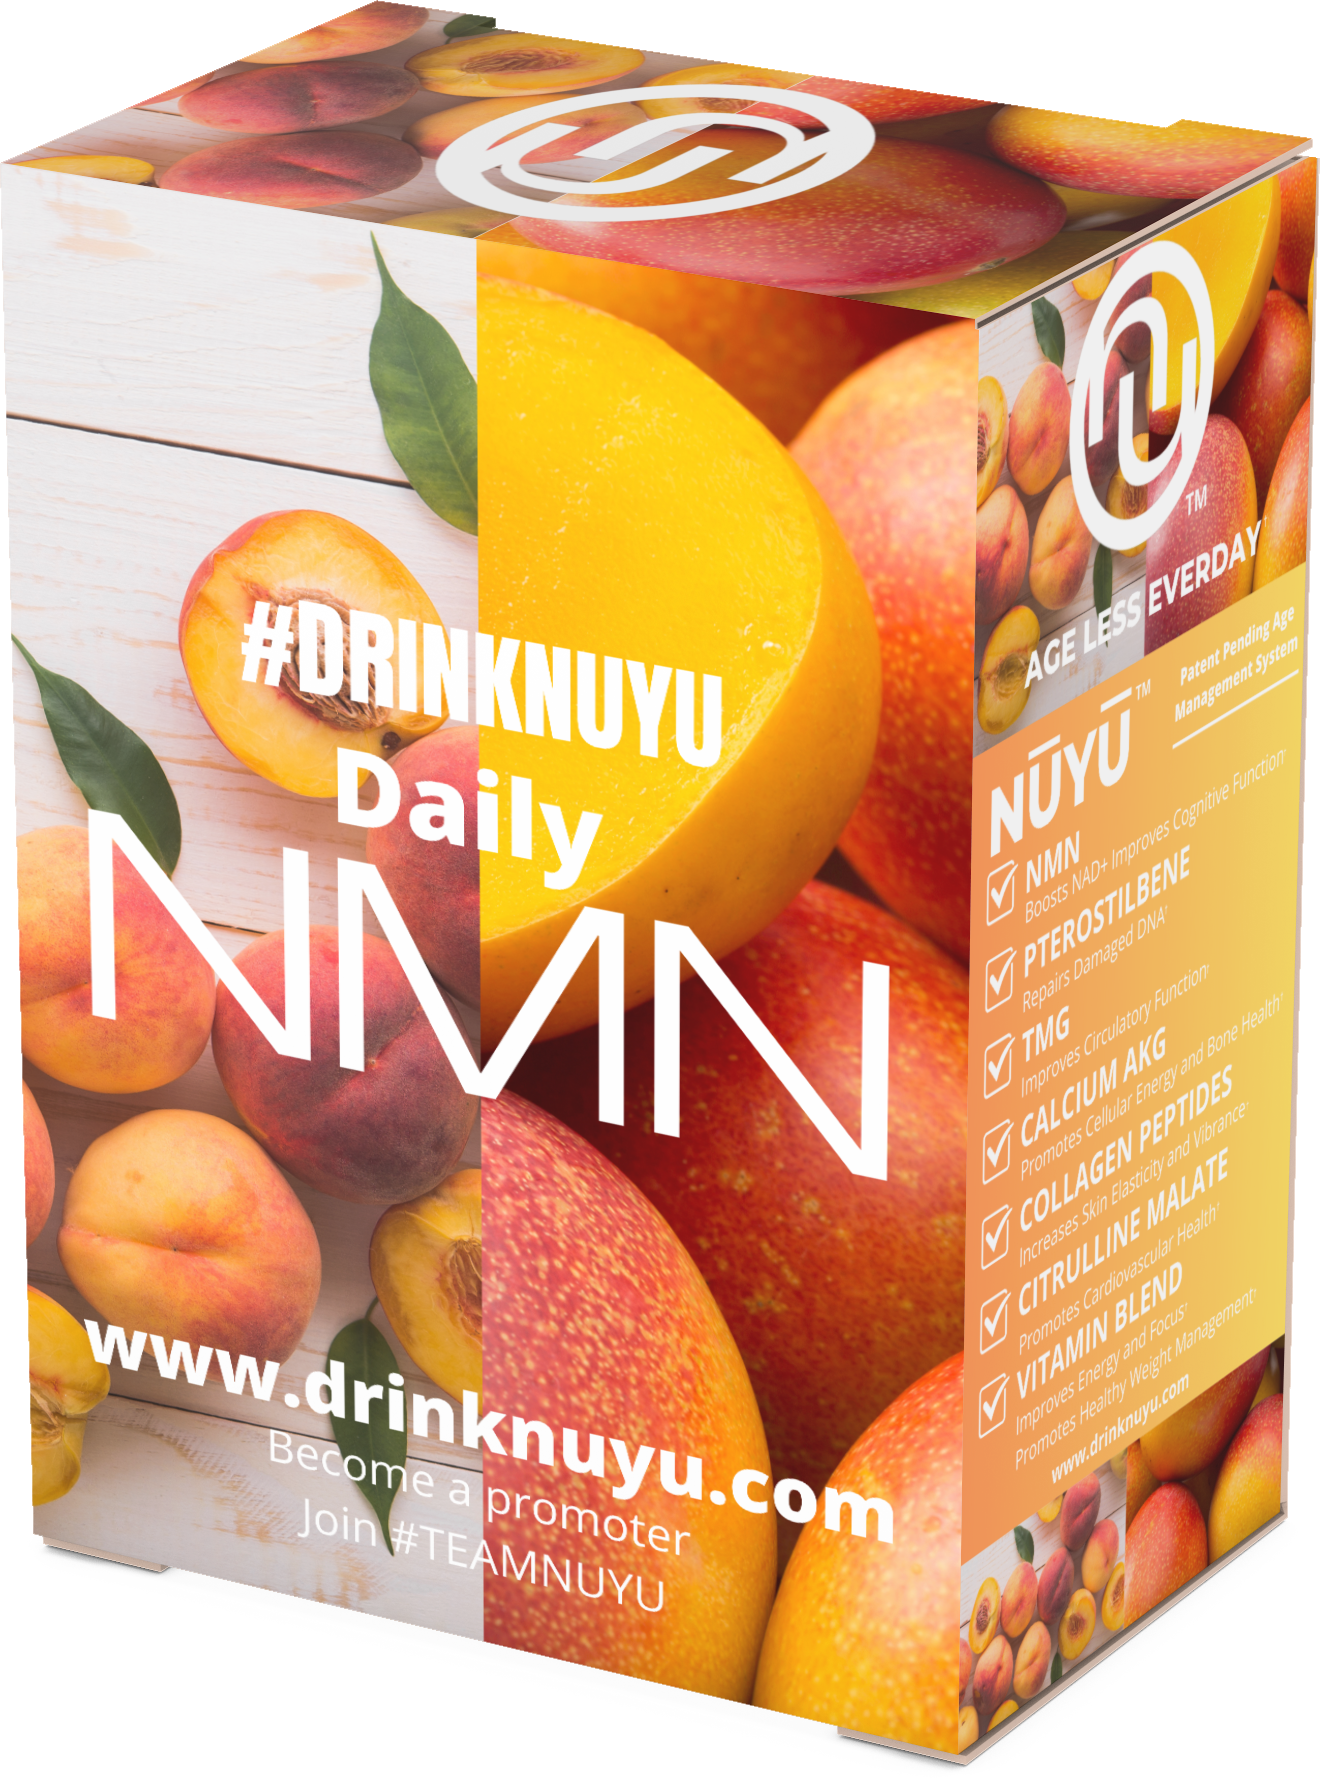 NŪYŪ Daily NMN™ Longevity Drink-Tropical Peach Mango